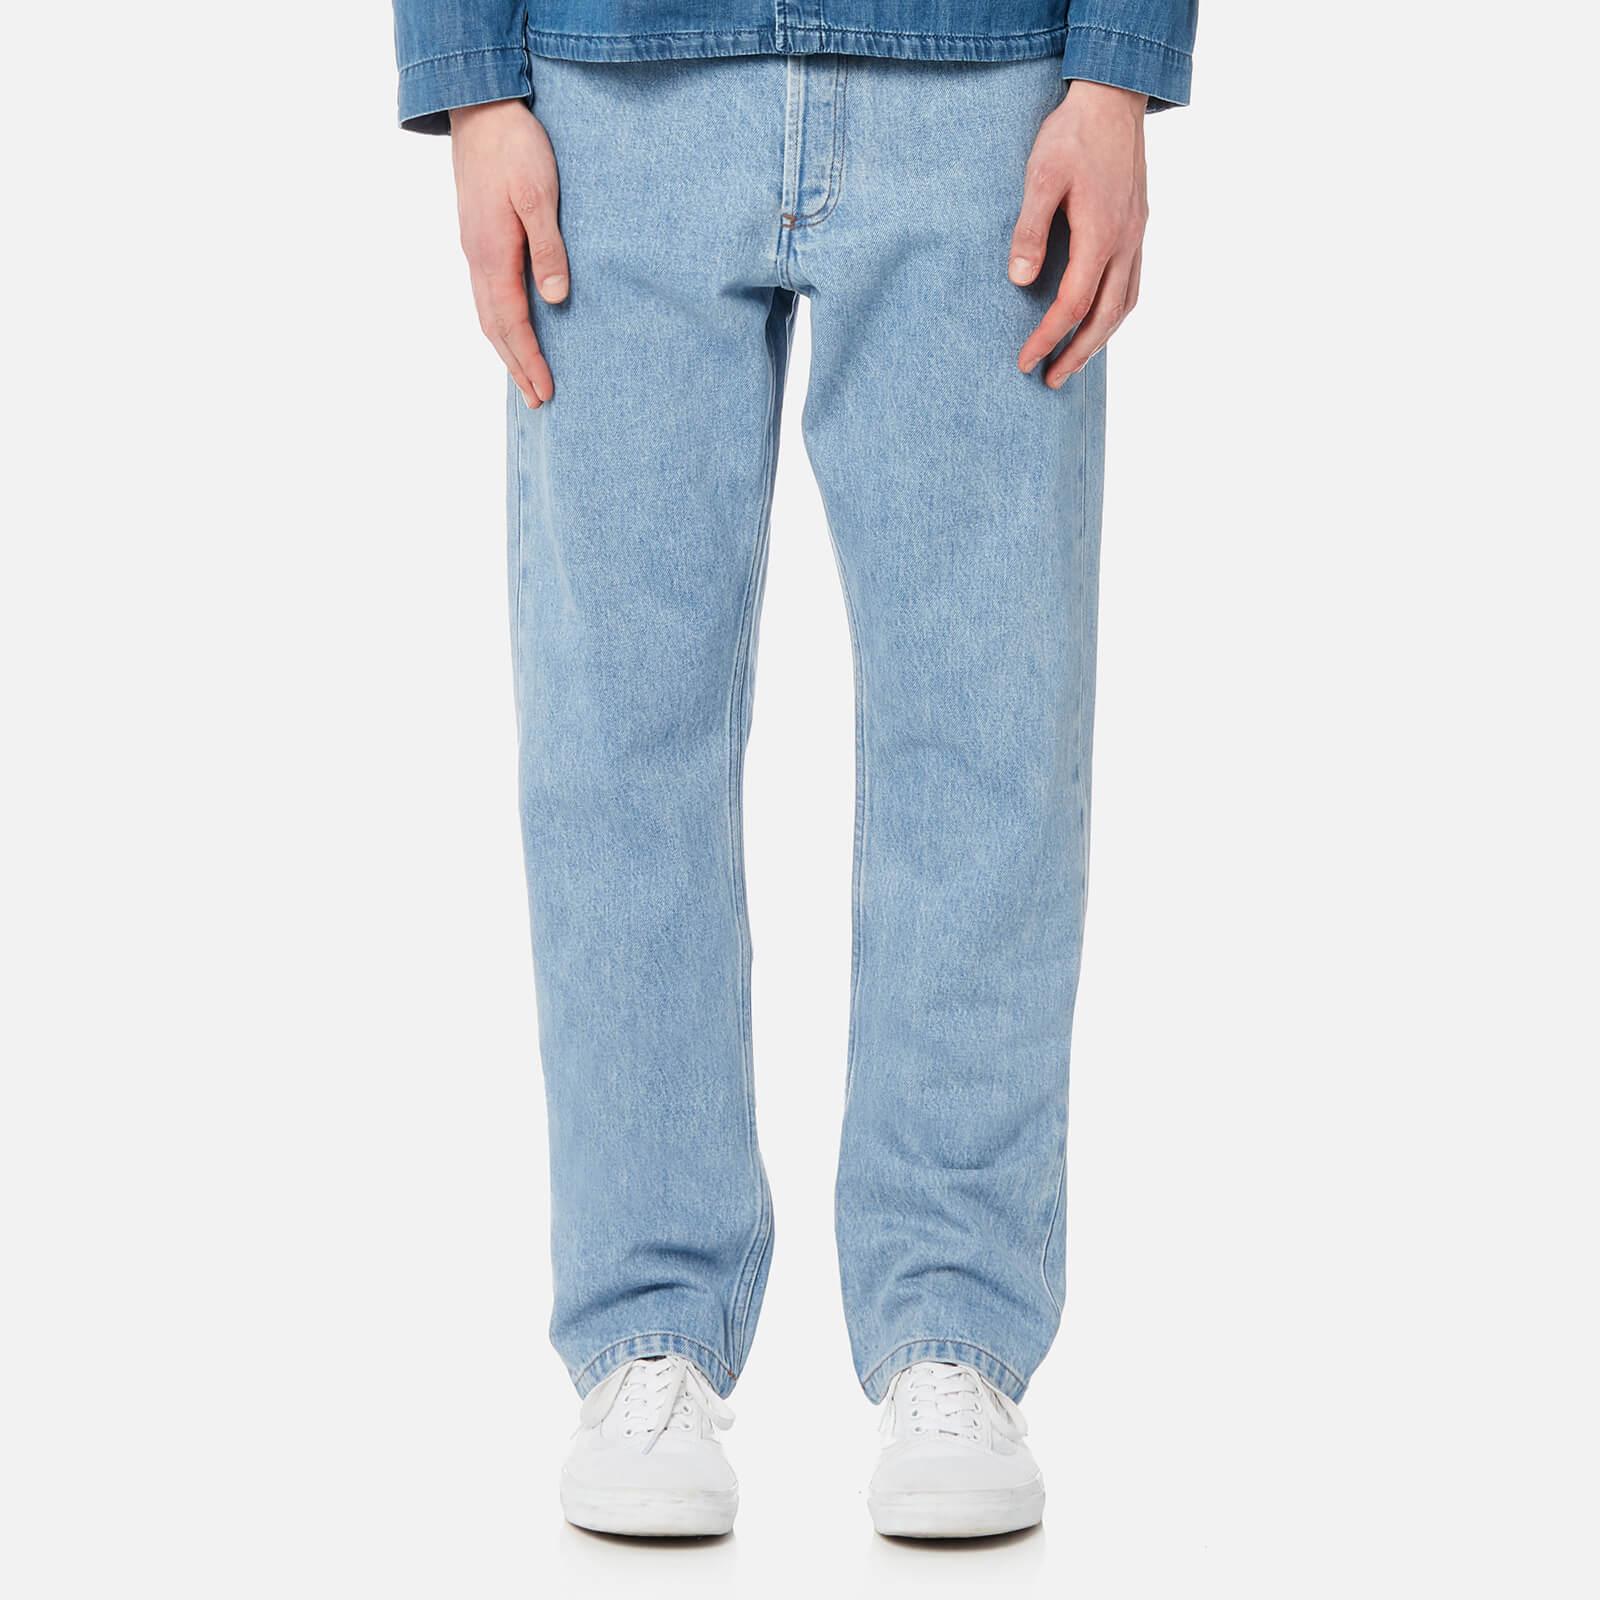 A.P.C. Denim Standard Jeans in Blue for Men - Lyst